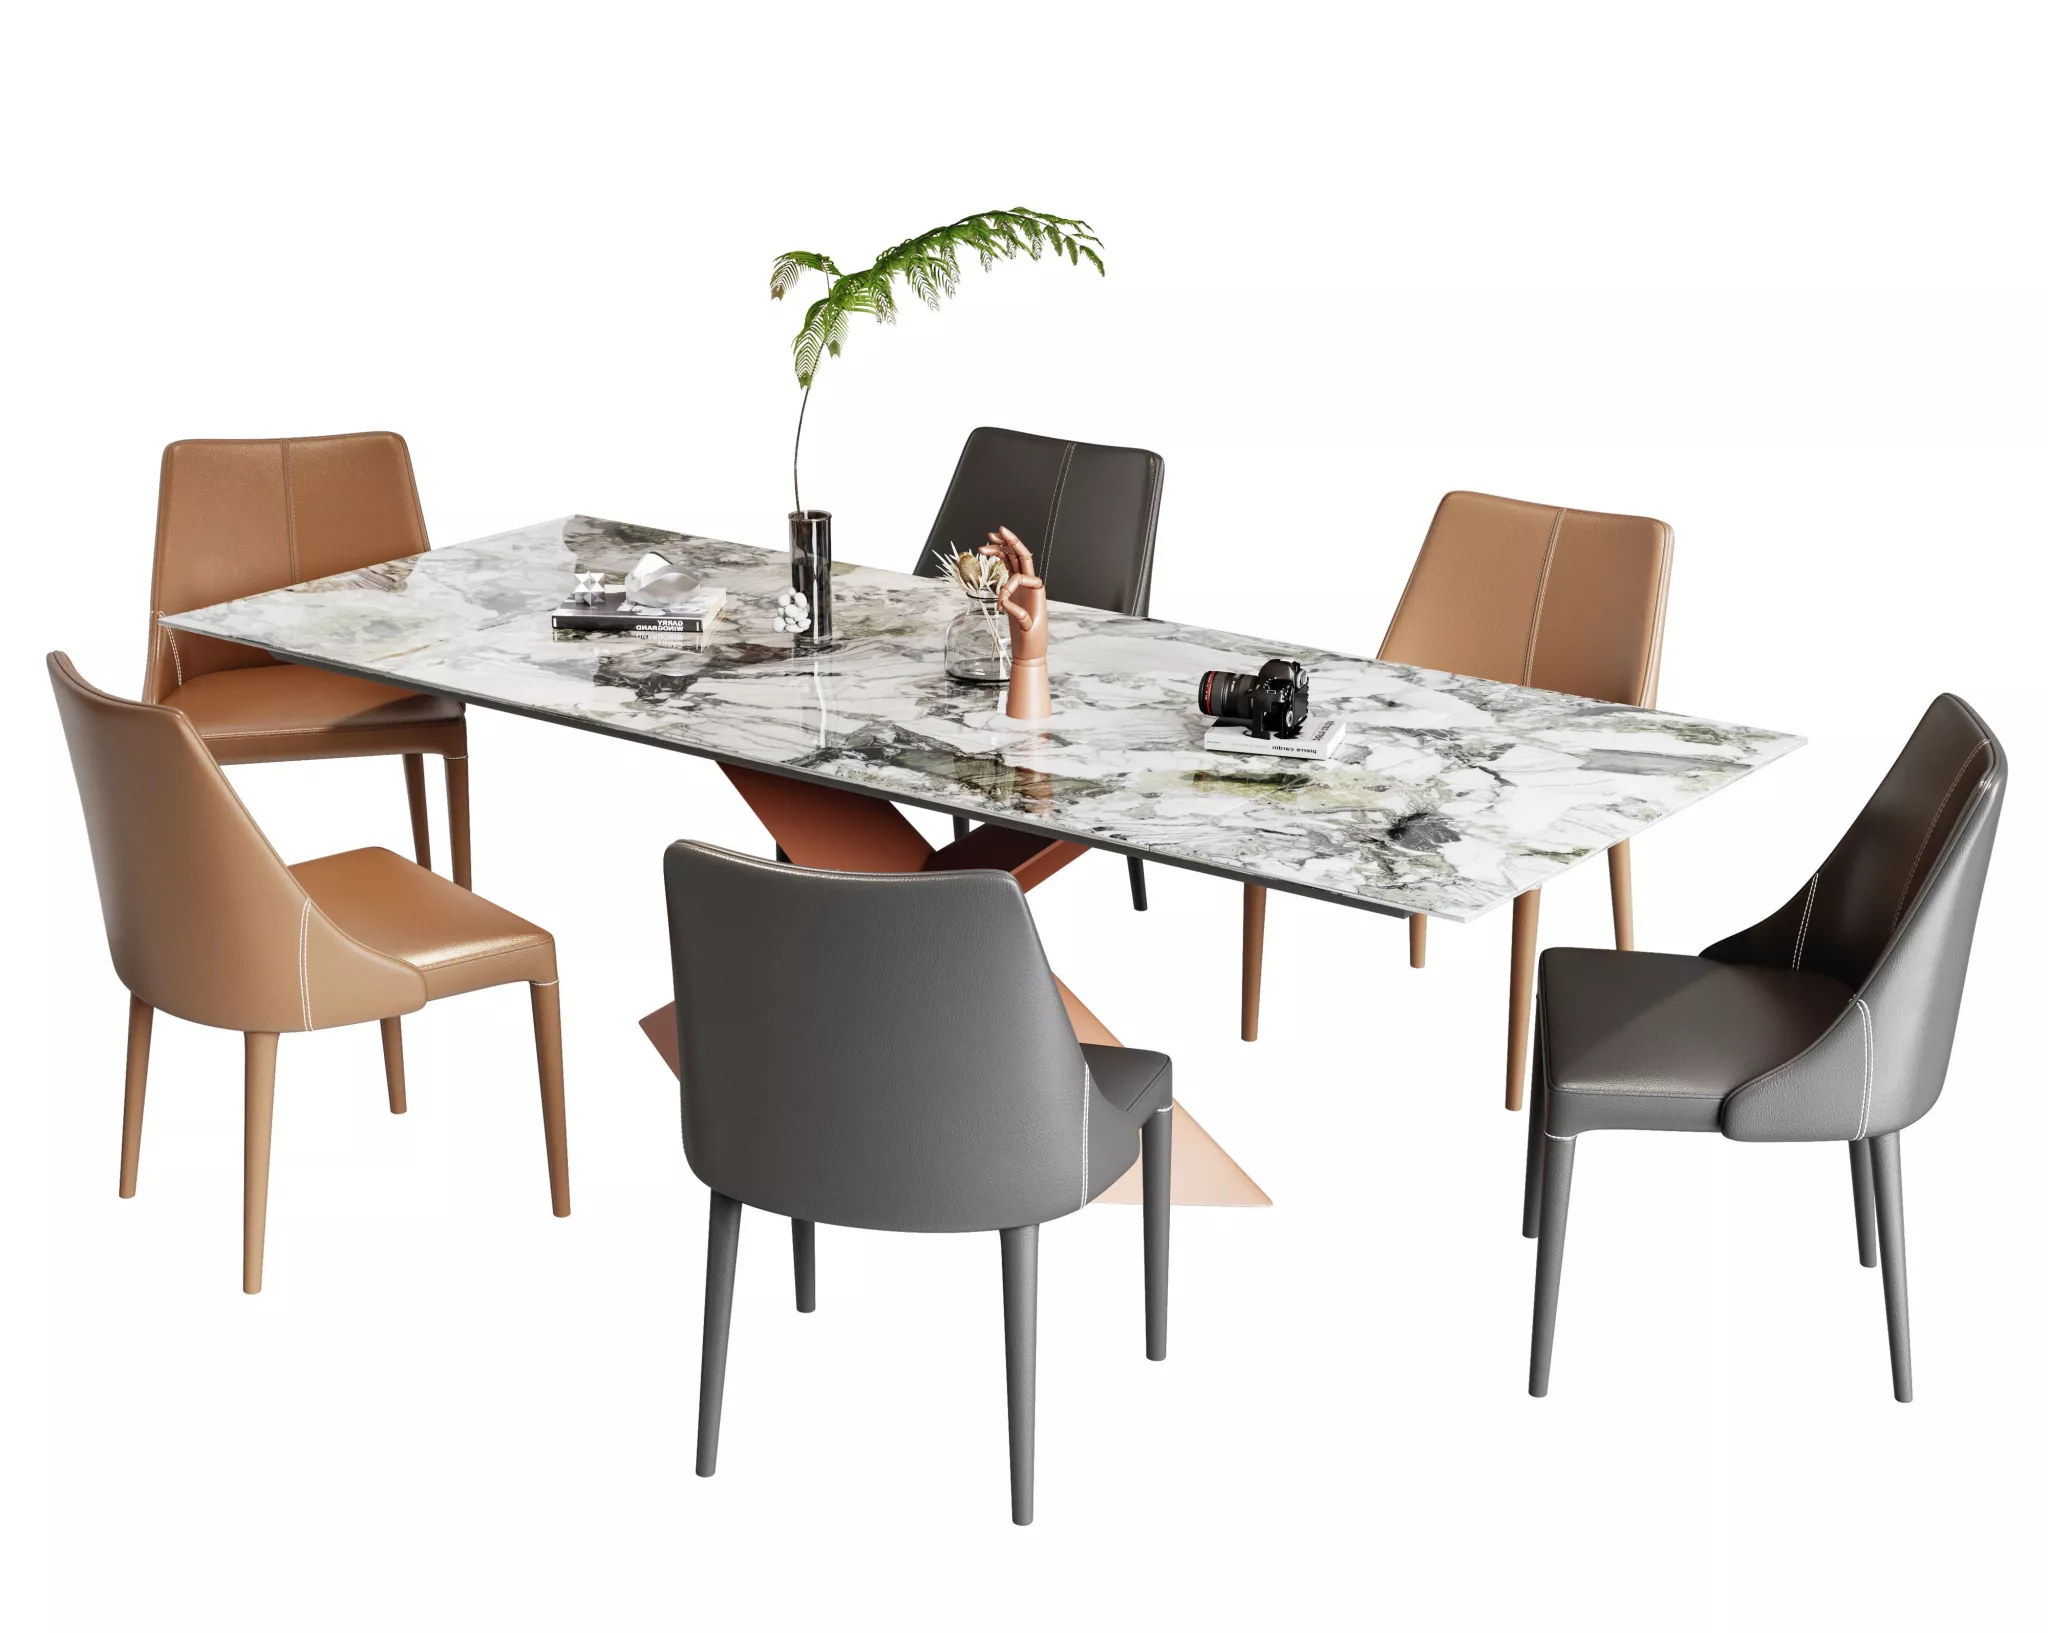 MODERN DINING TABLE SET - SKETCHUP 3D MODEL - VRAY - 243344